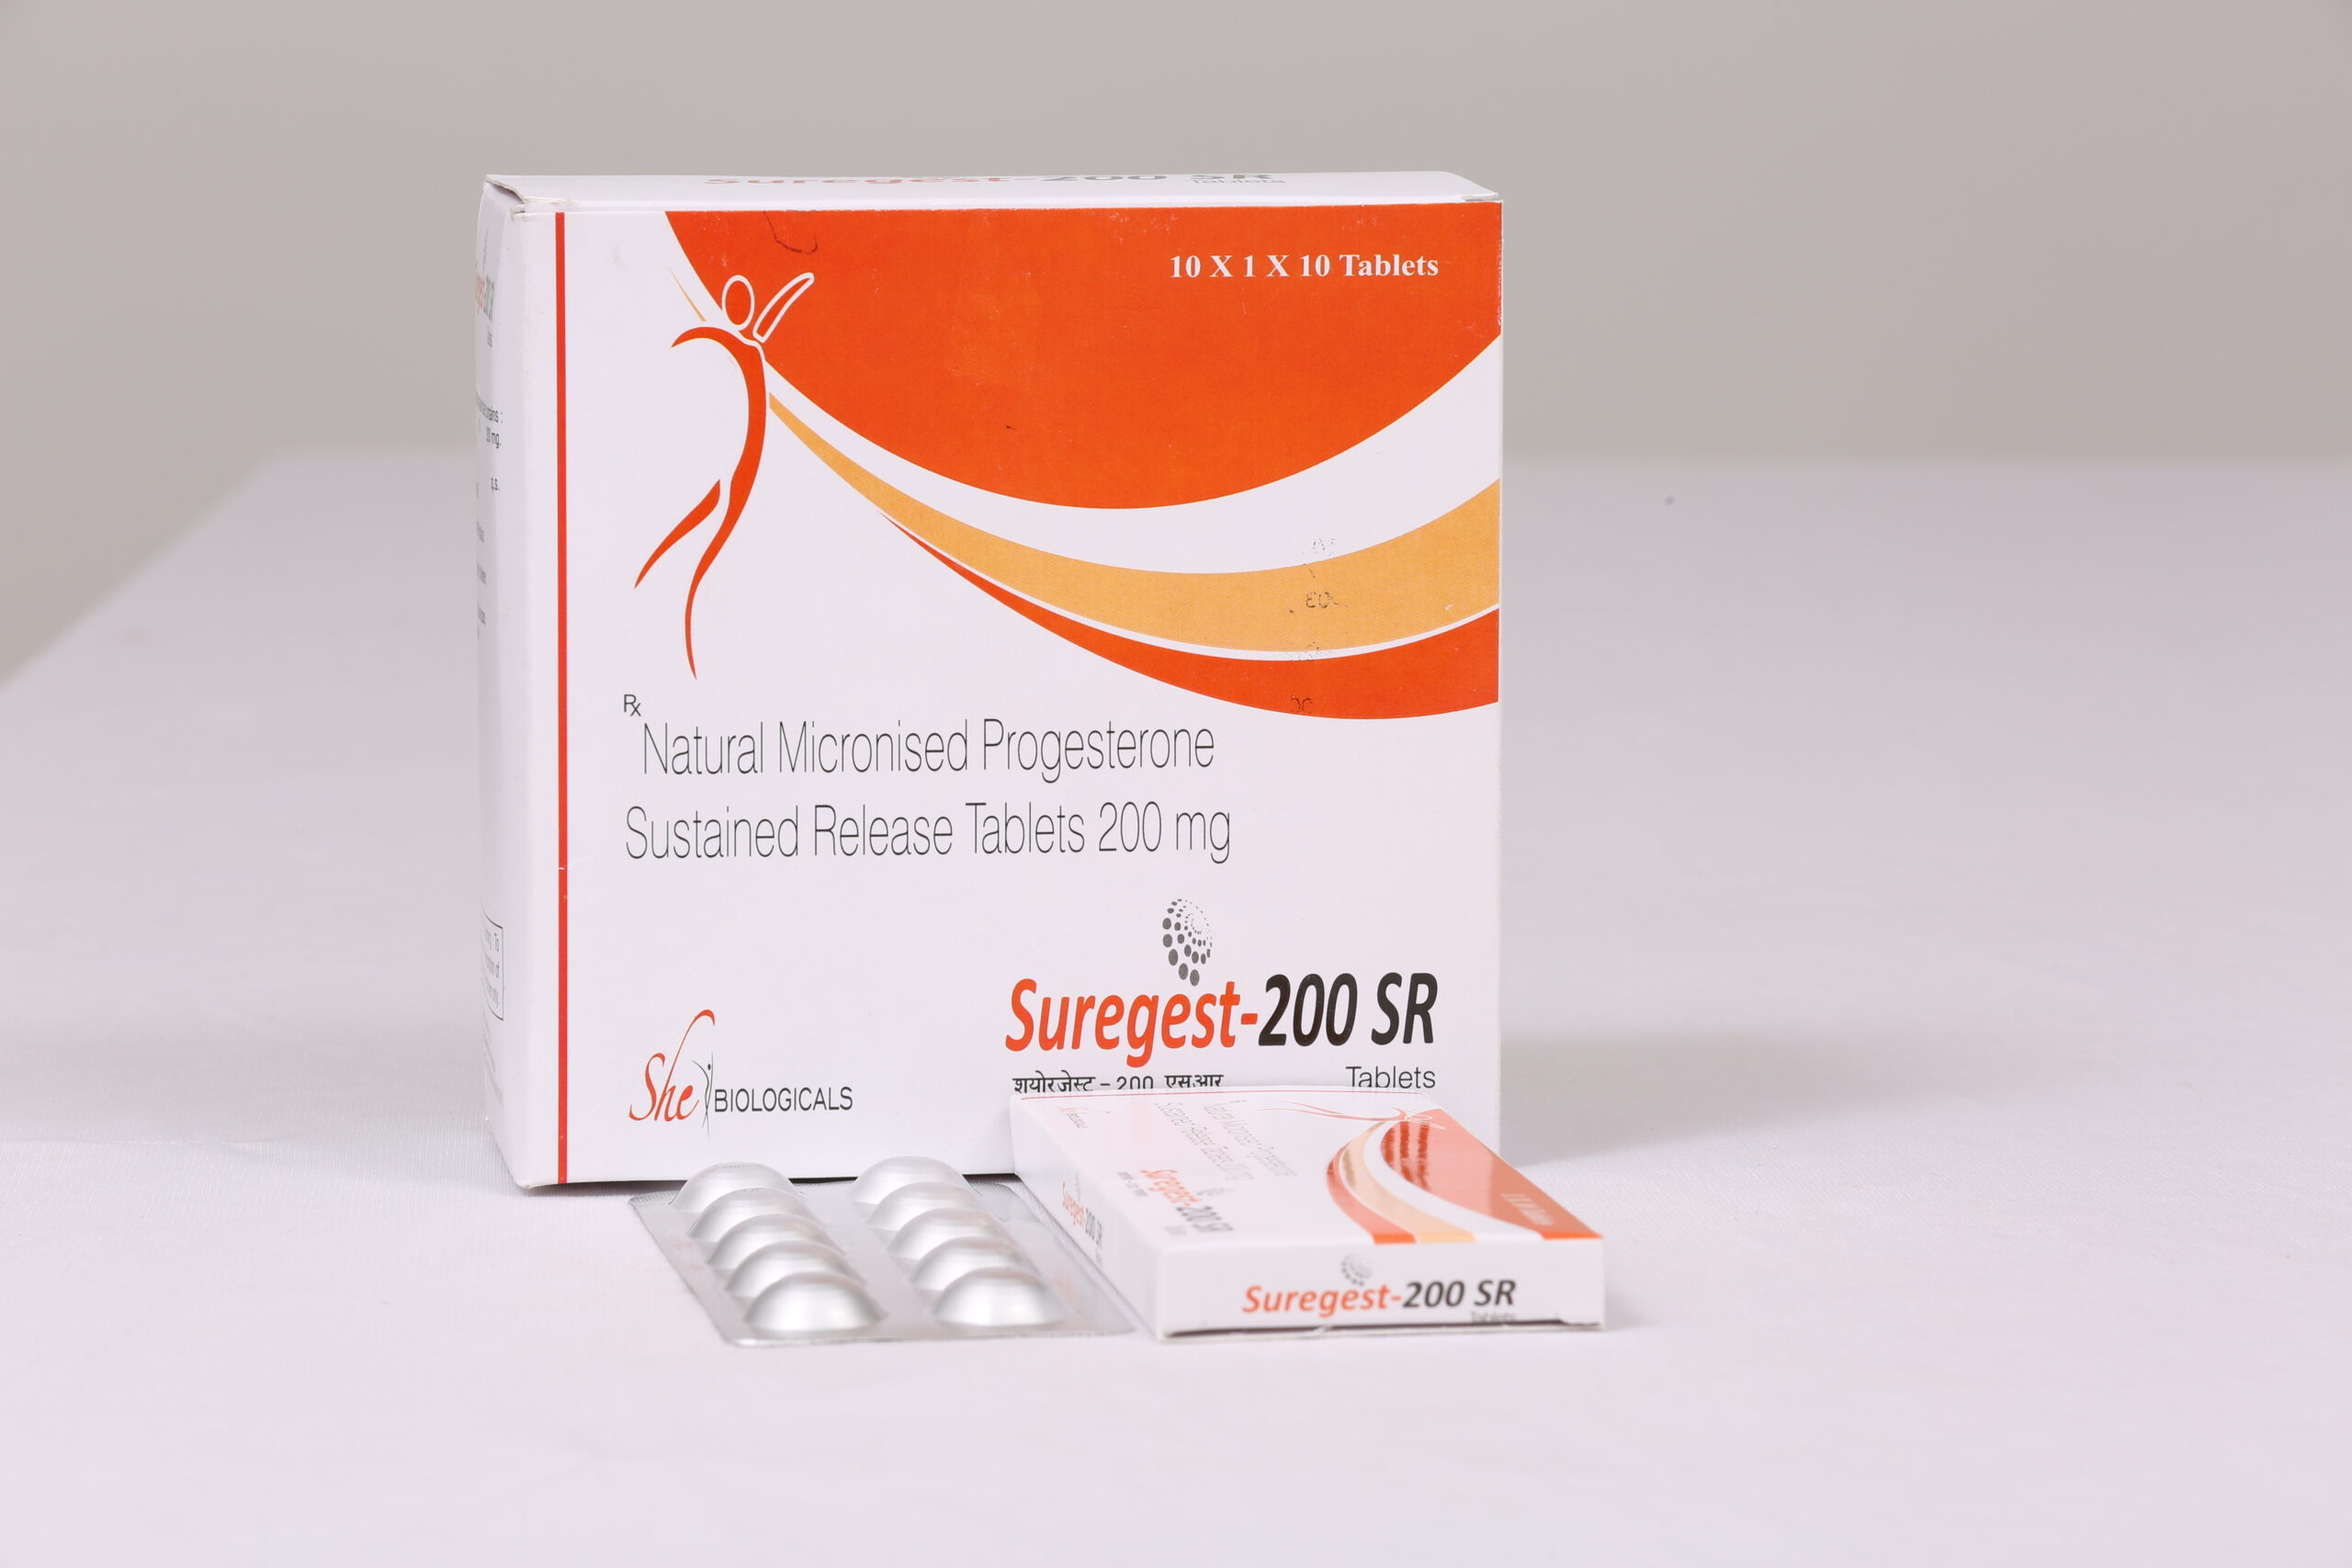 SUREGEST-200SR (Natural Micronised Progestrone 200 mg)